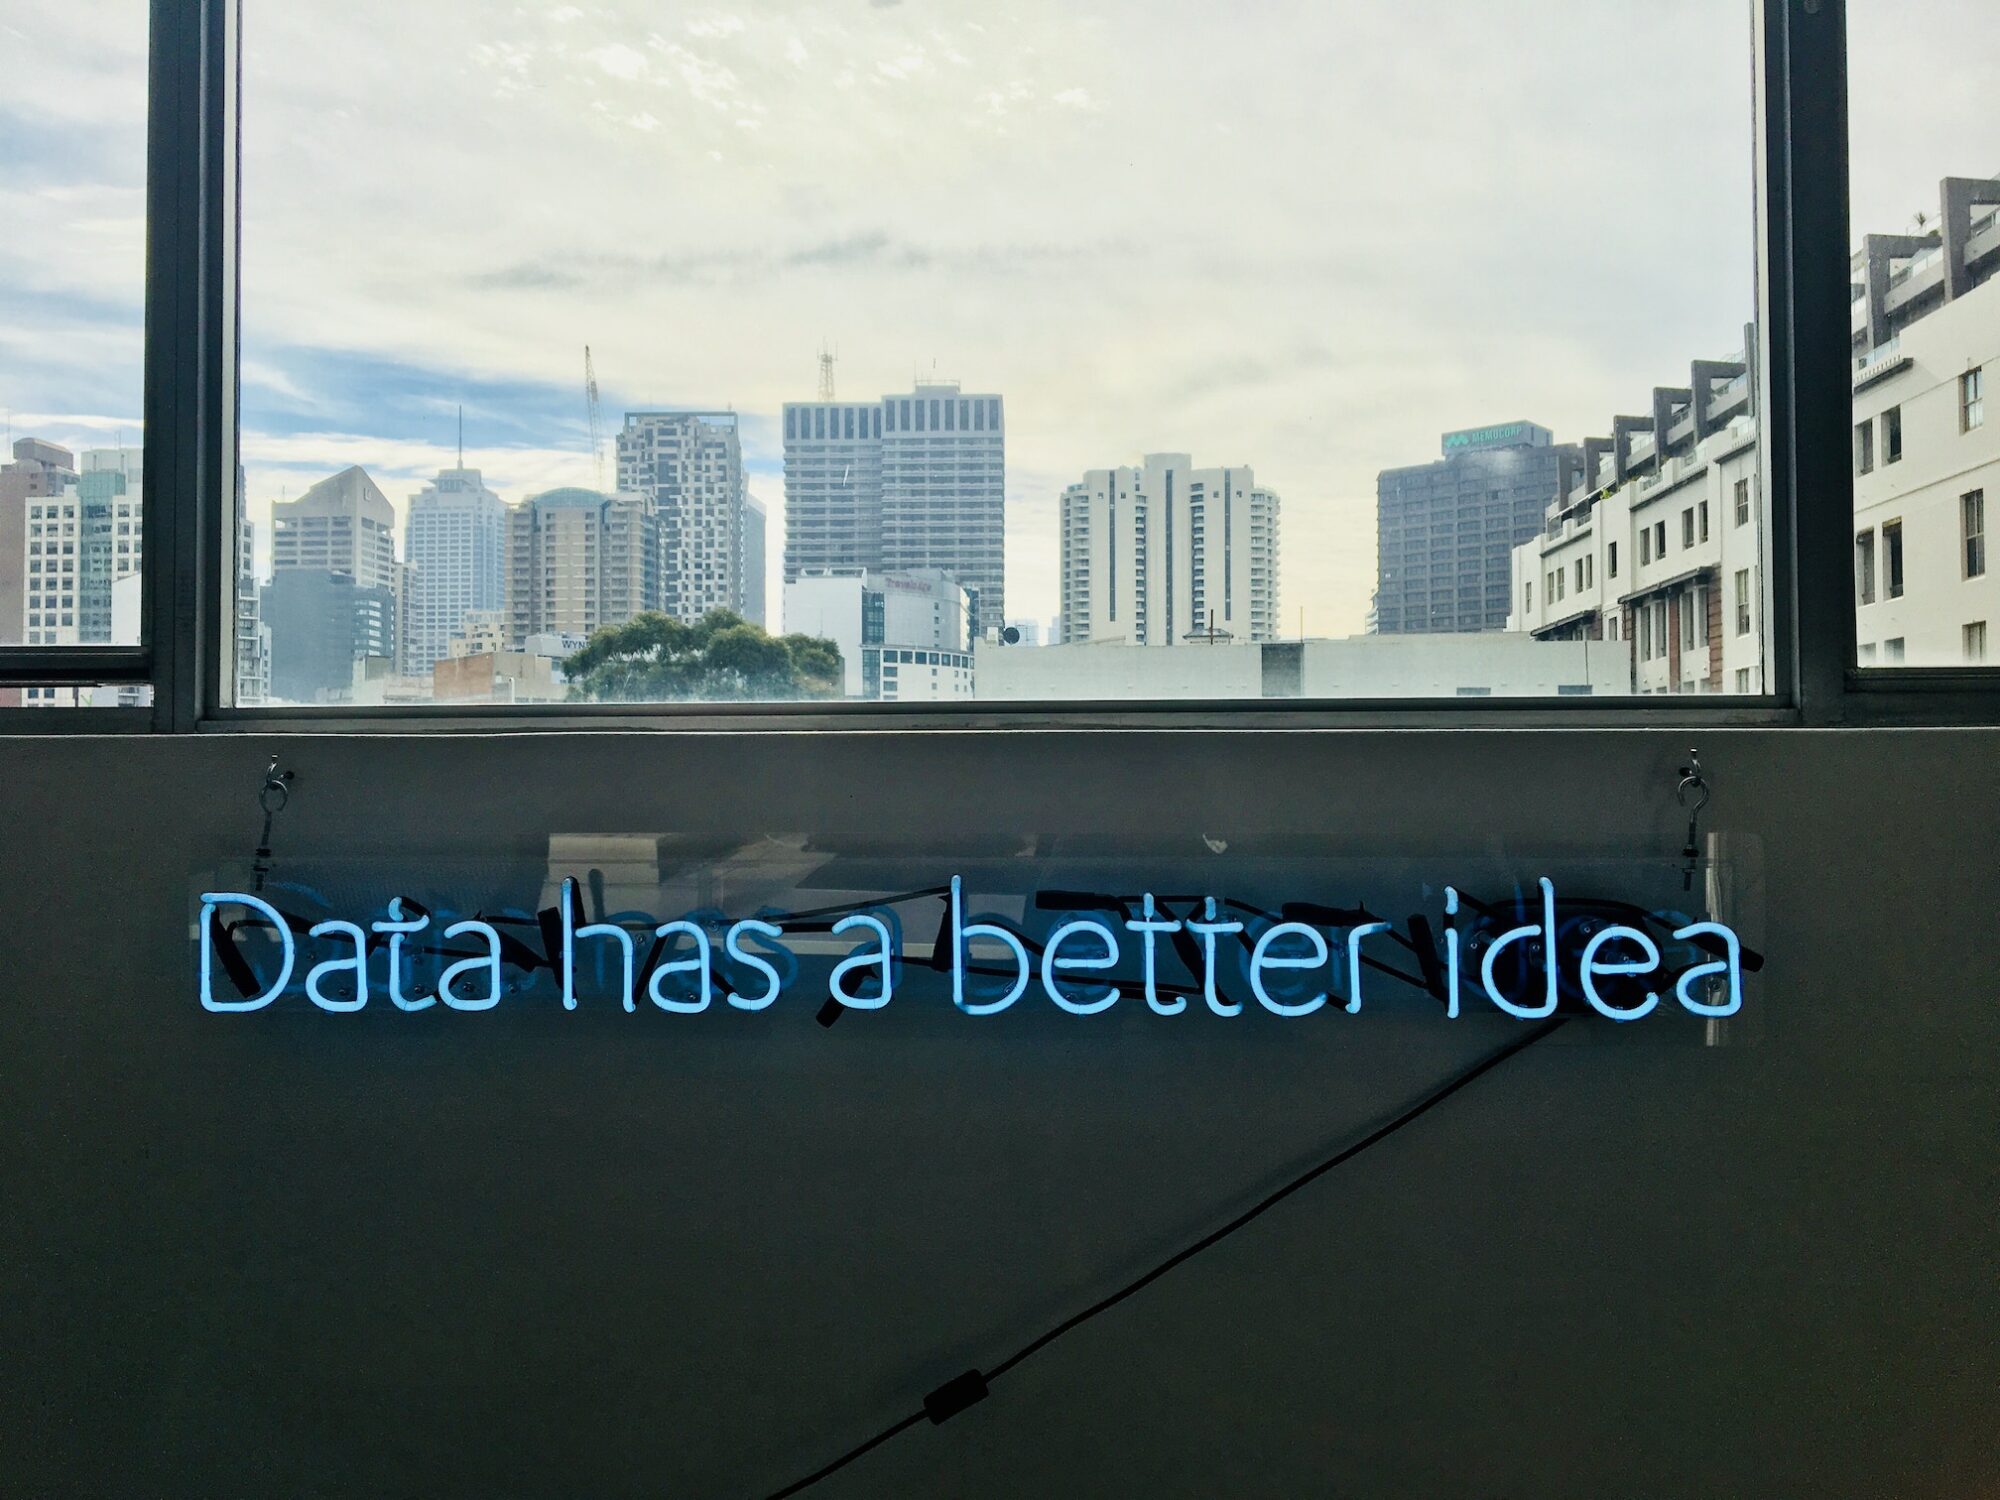 foto van neon letters die zeggen 'data has a better idea'